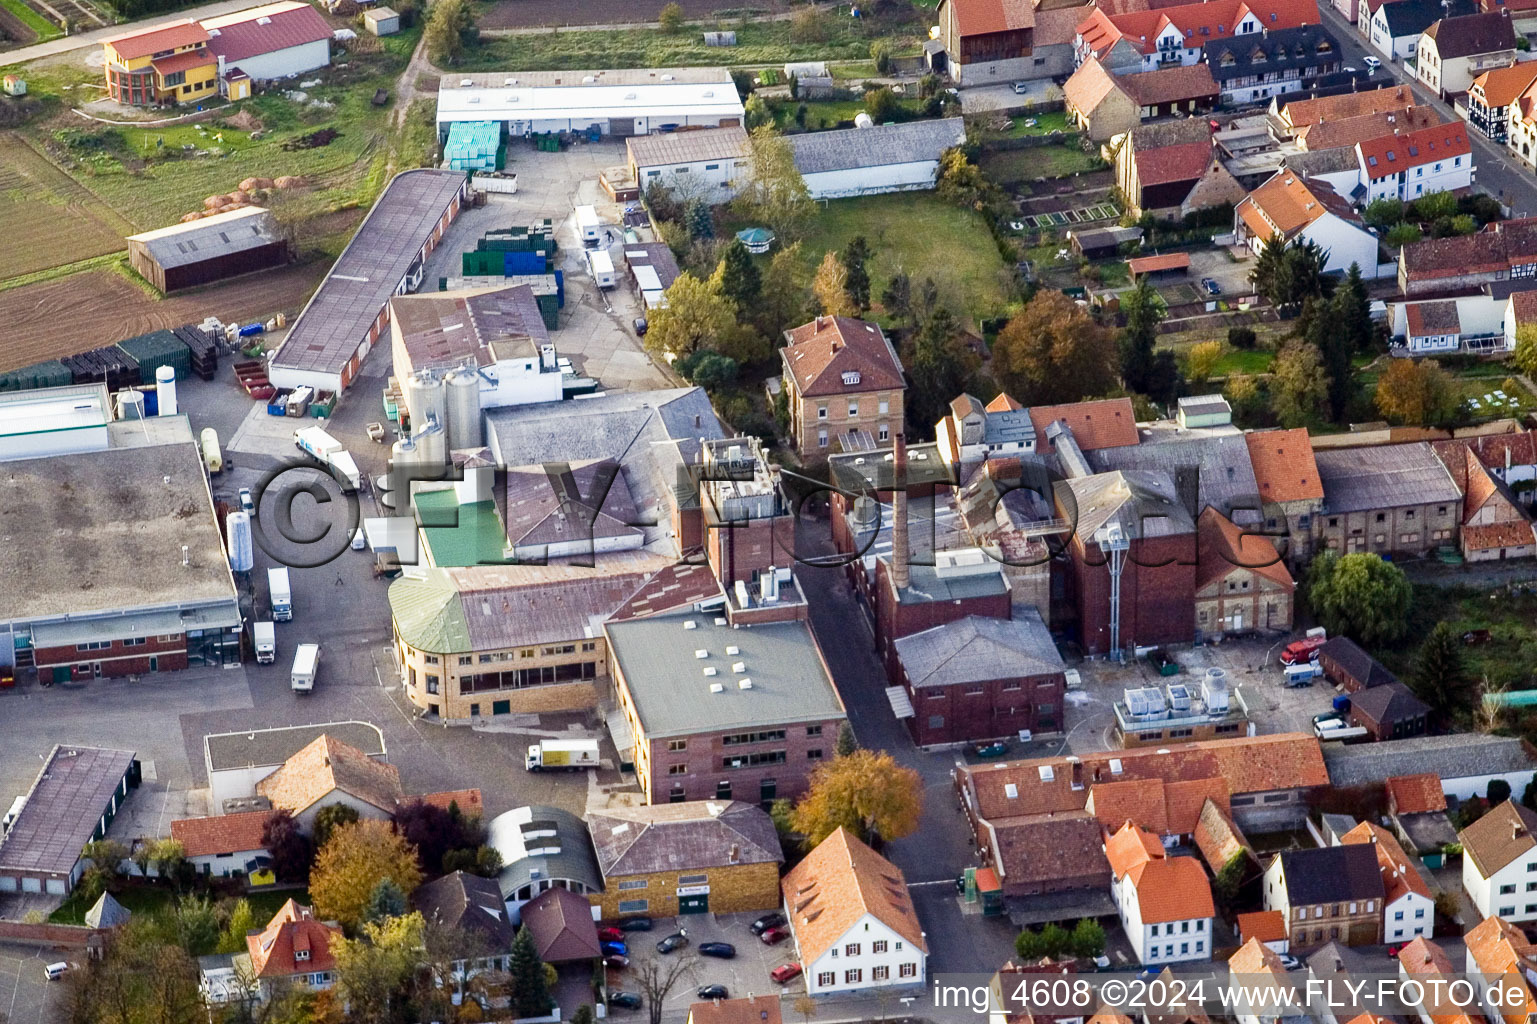 Bellheimer brewery premises in Bellheim in the state Rhineland-Palatinate, Germany